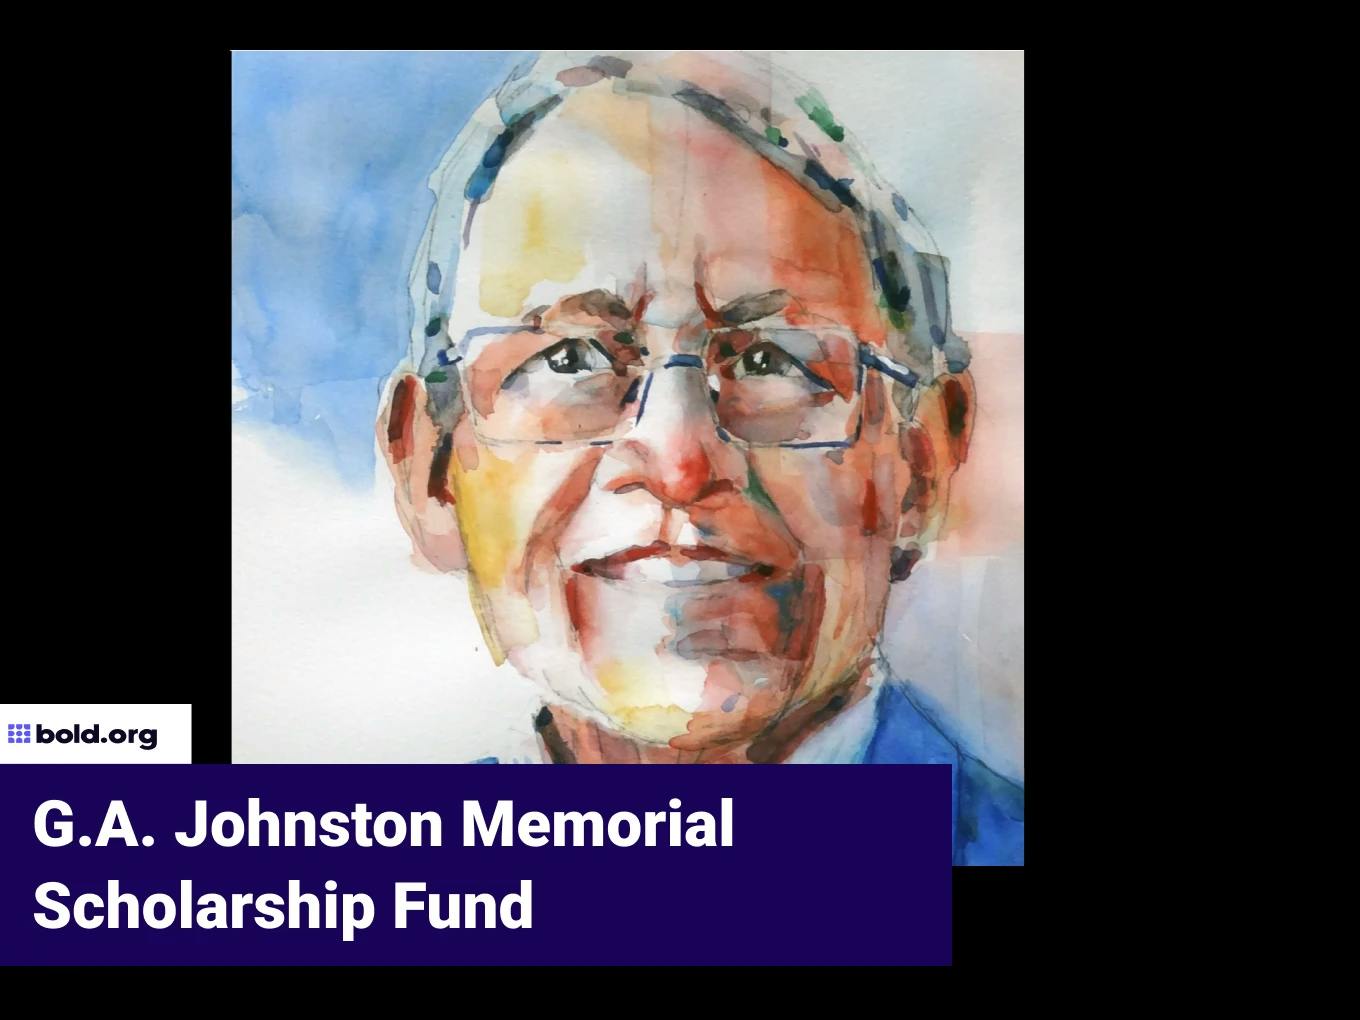 G.A. Johnston Memorial Scholarship Fund